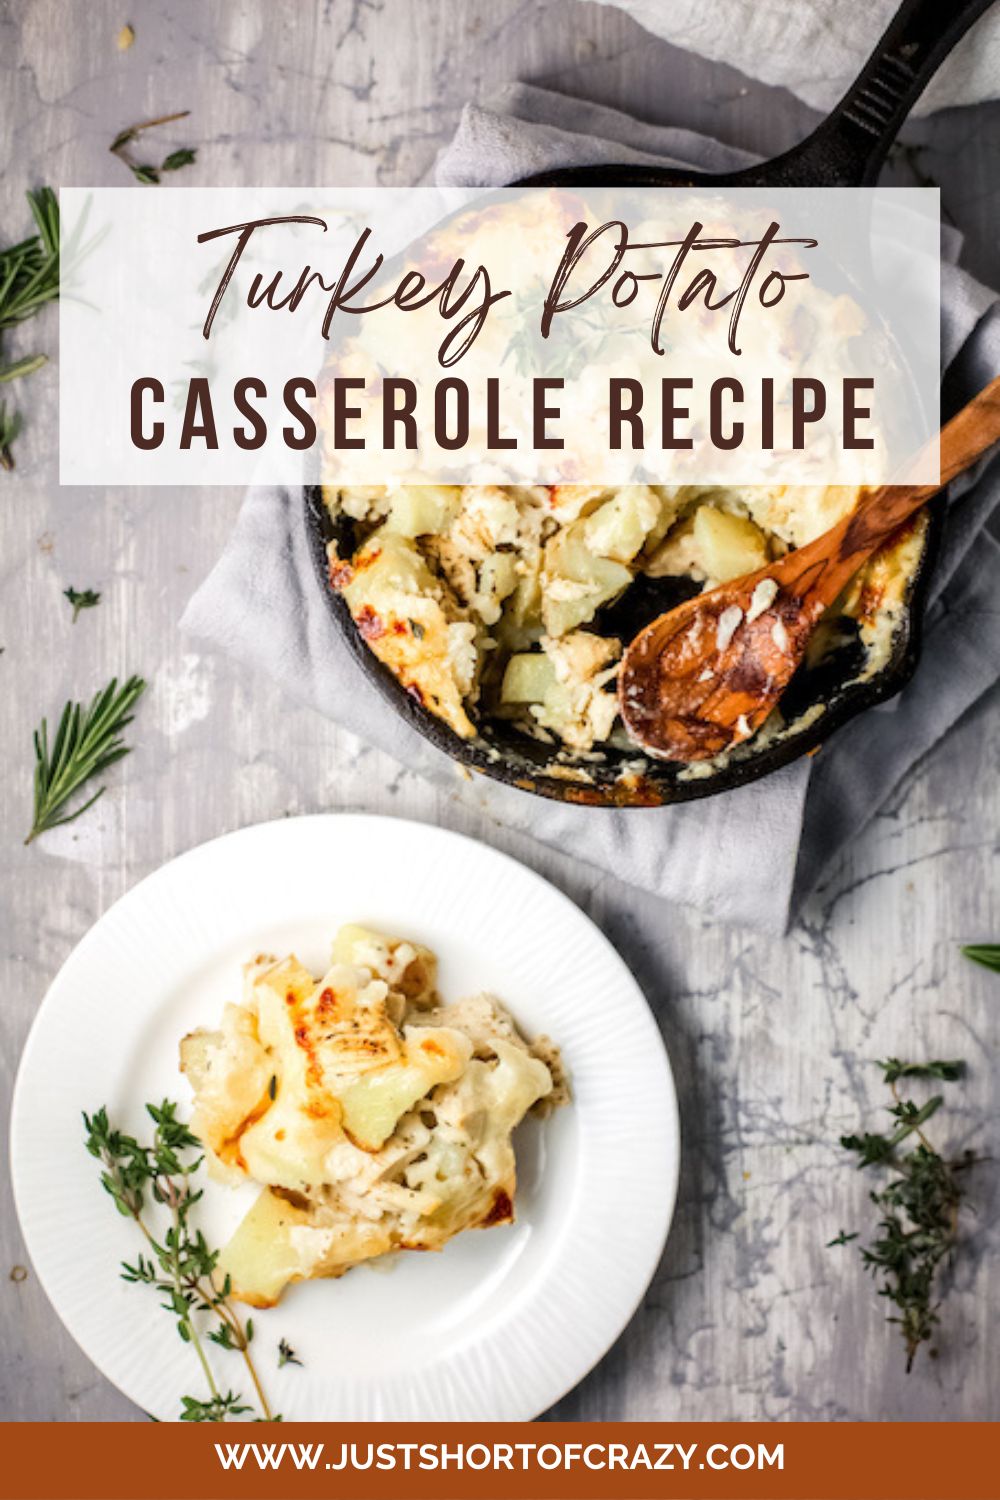 Photo for a Pinterest Pin of The Turkey Potato Casserole.